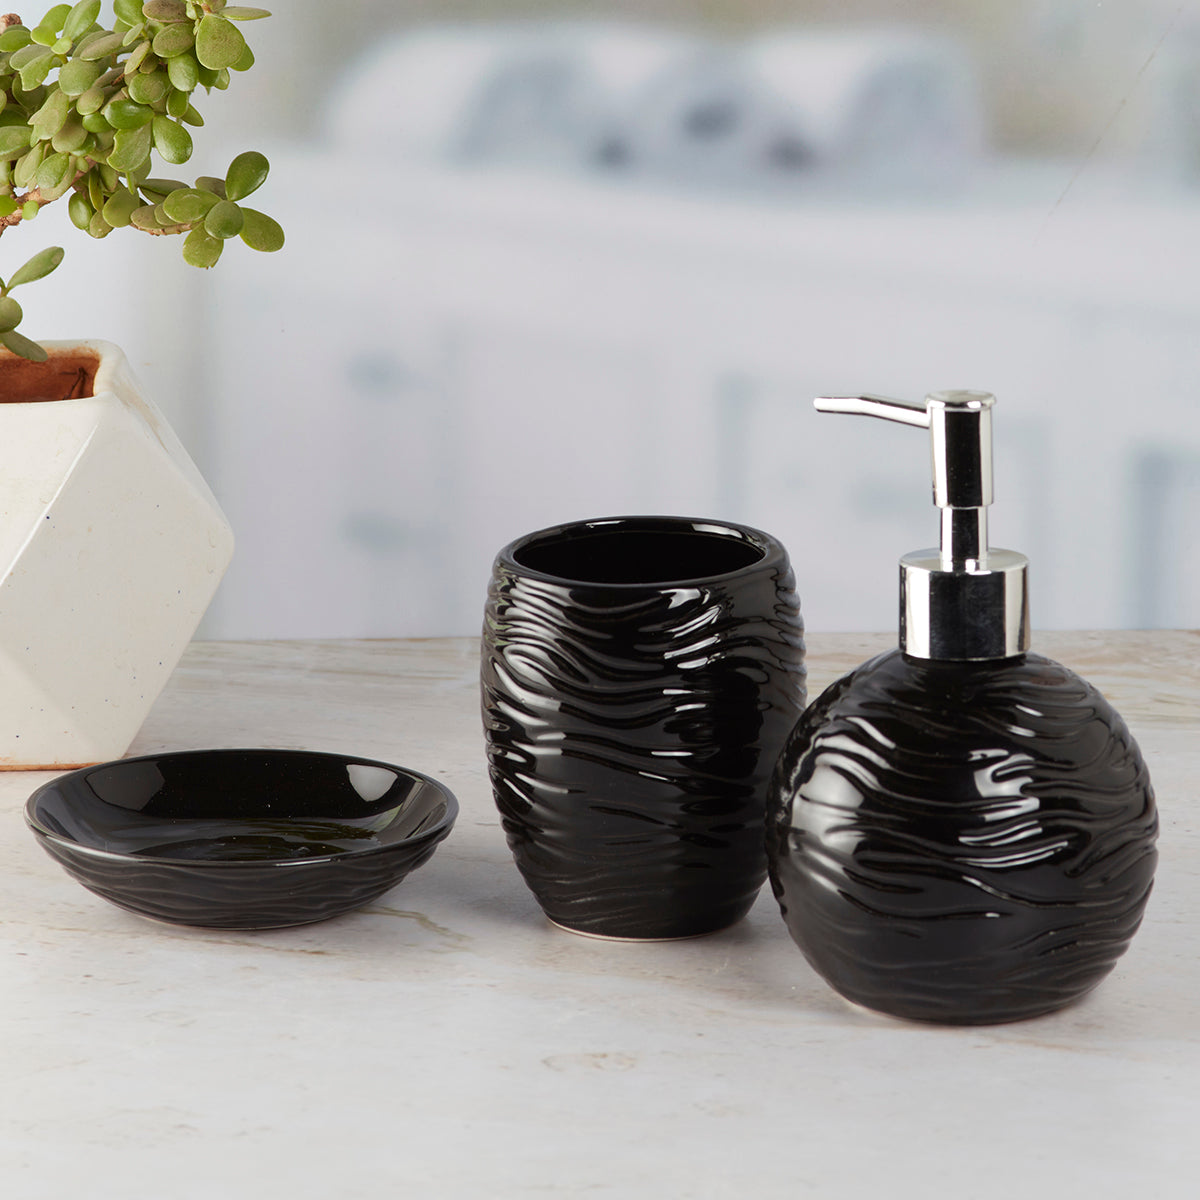 Ceramic Bathroom Accessories Set of 3 Bath Set with Soap Dispenser (9614)